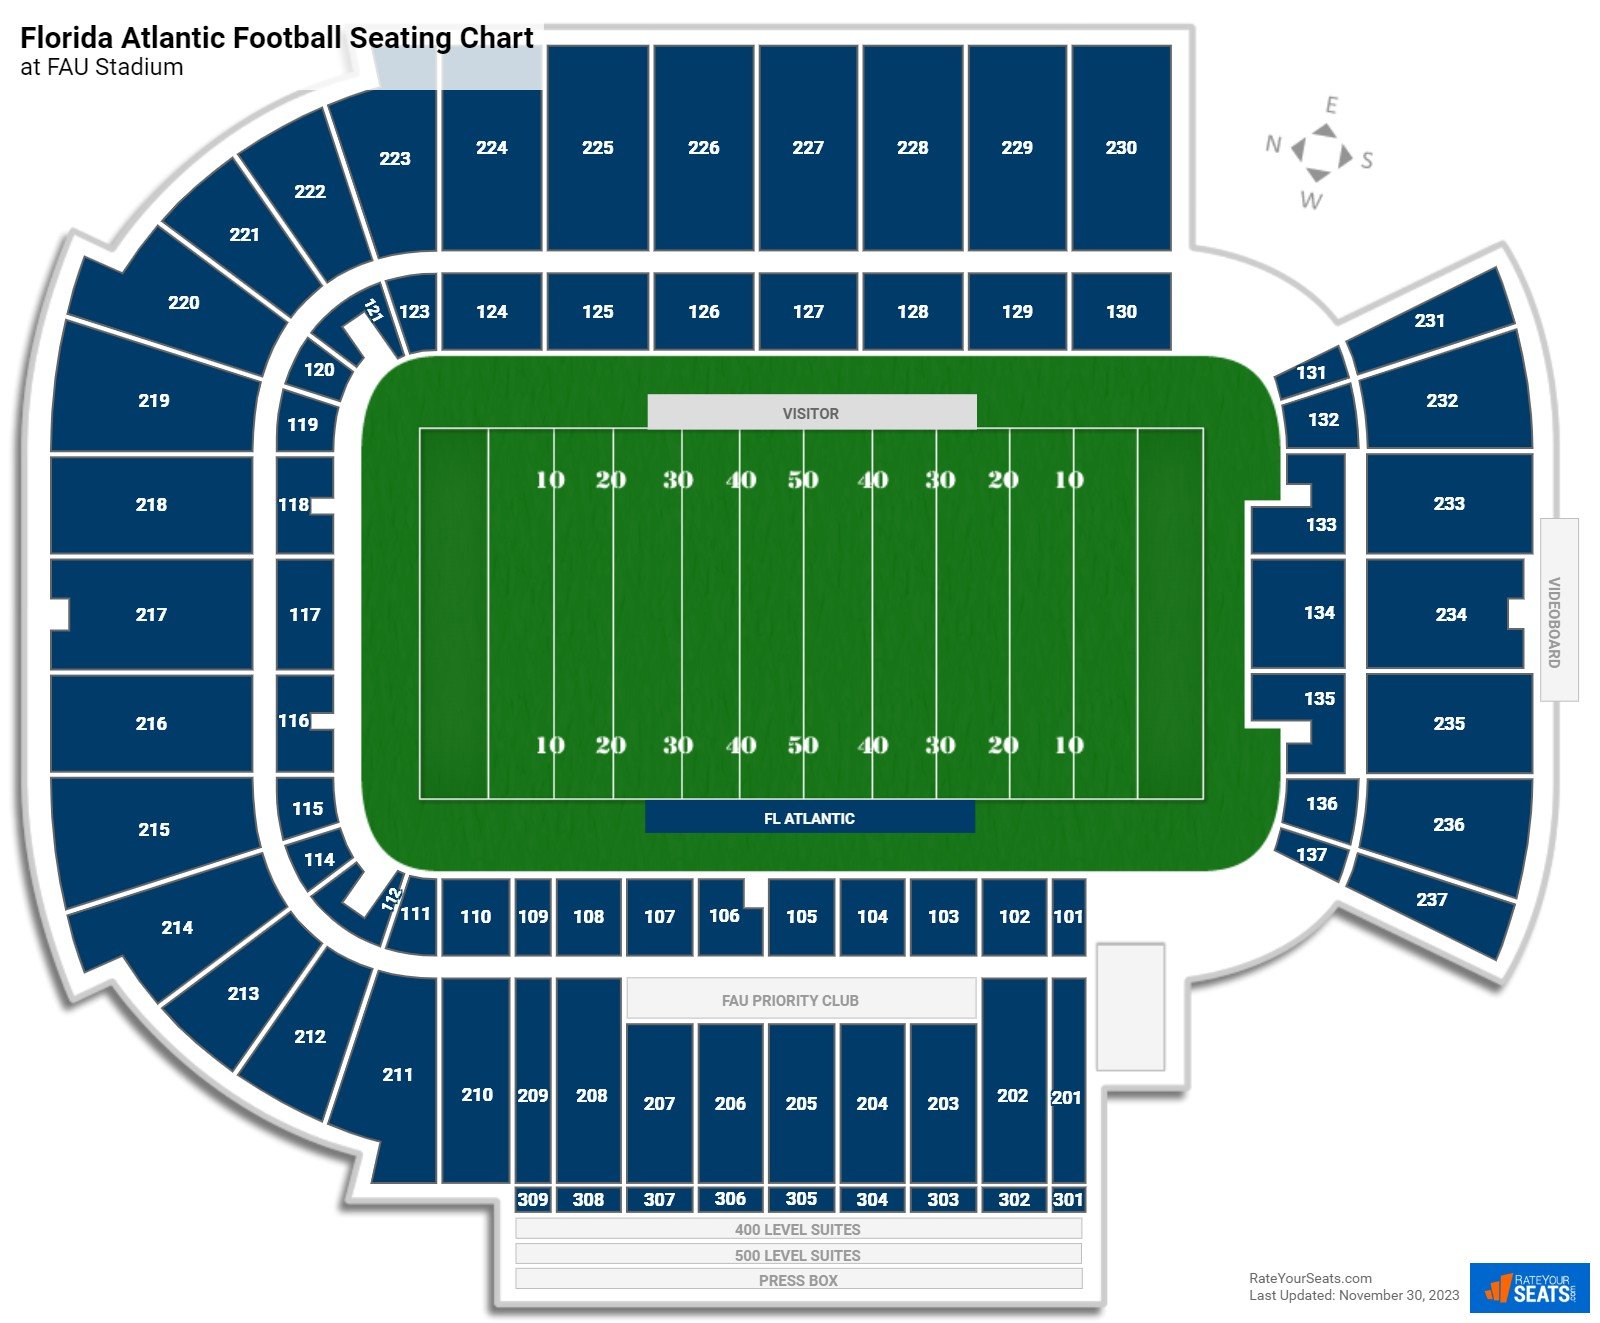 FAU Stadium Seating Chart - RateYourSeats.com